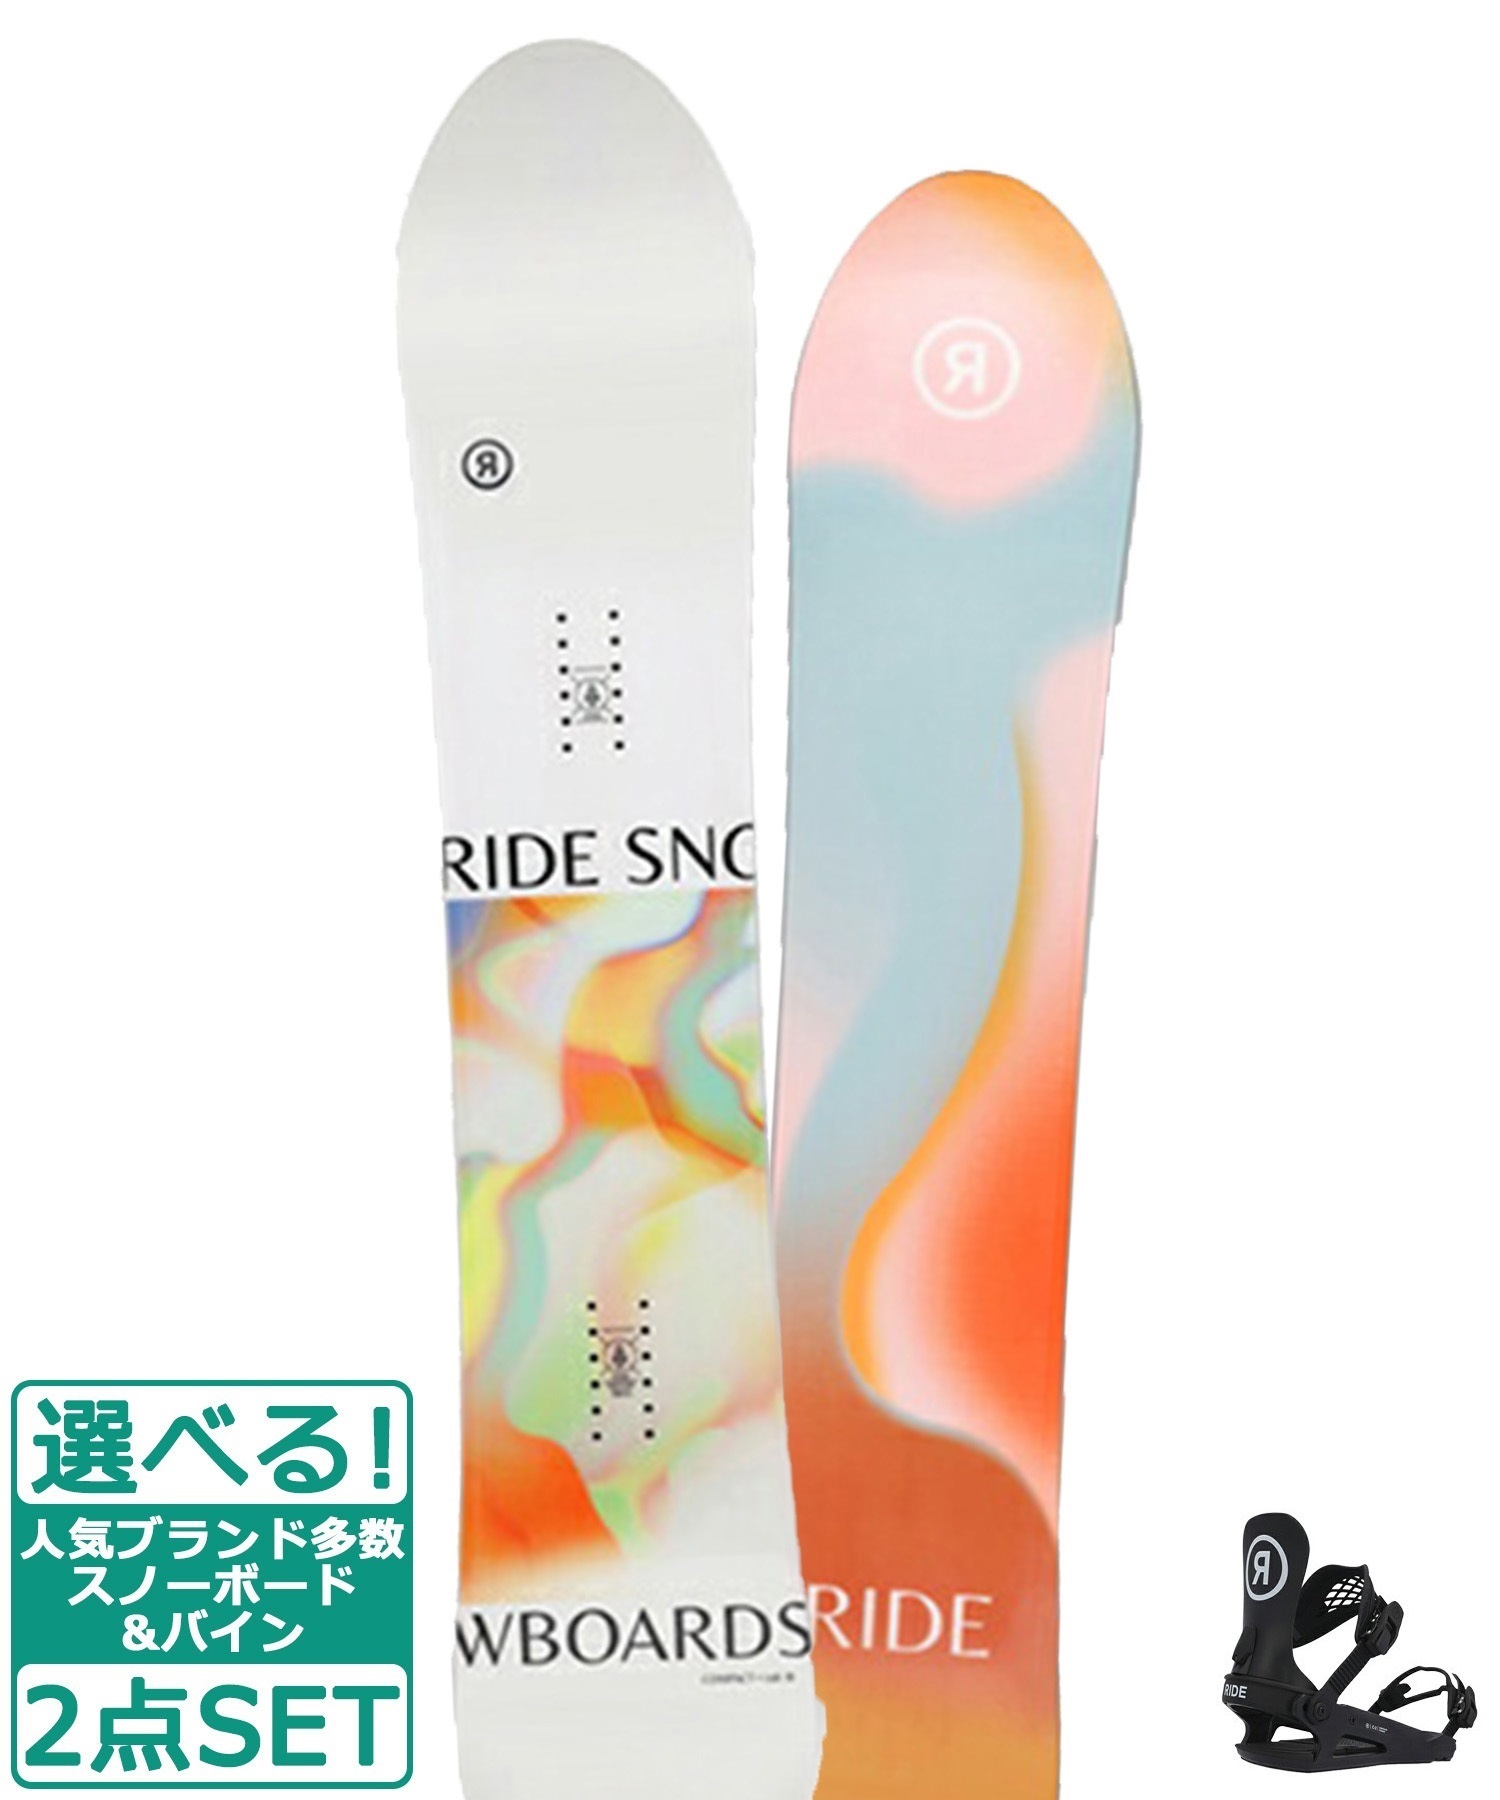 Ride ライド スノーボード板 美品